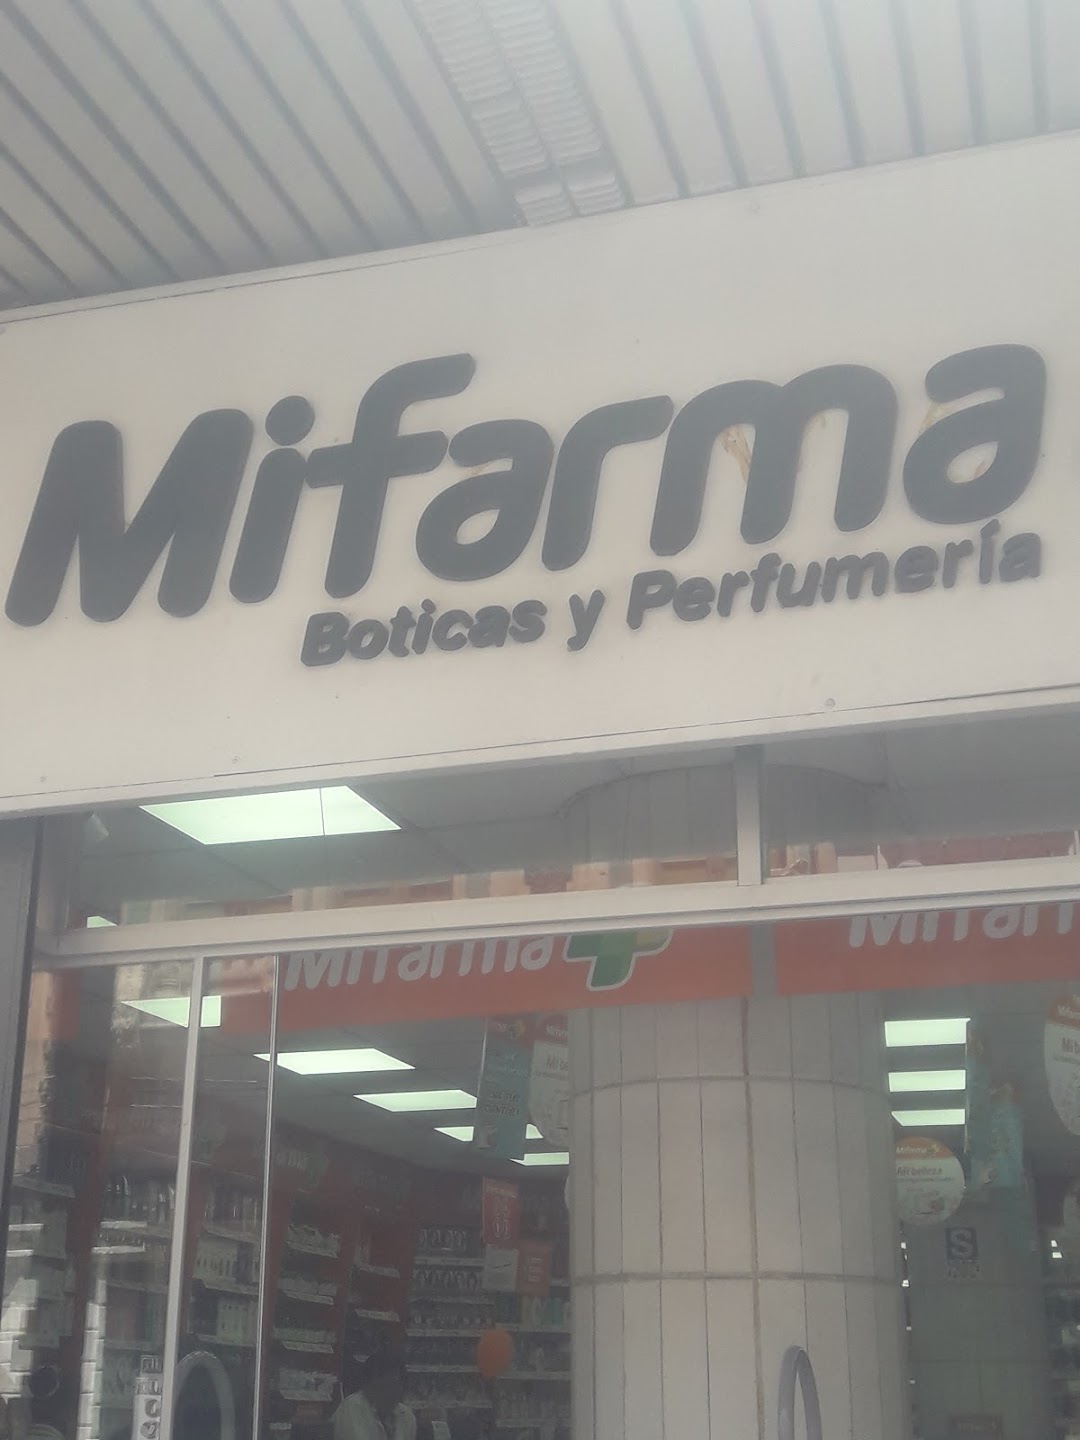 Mifarma